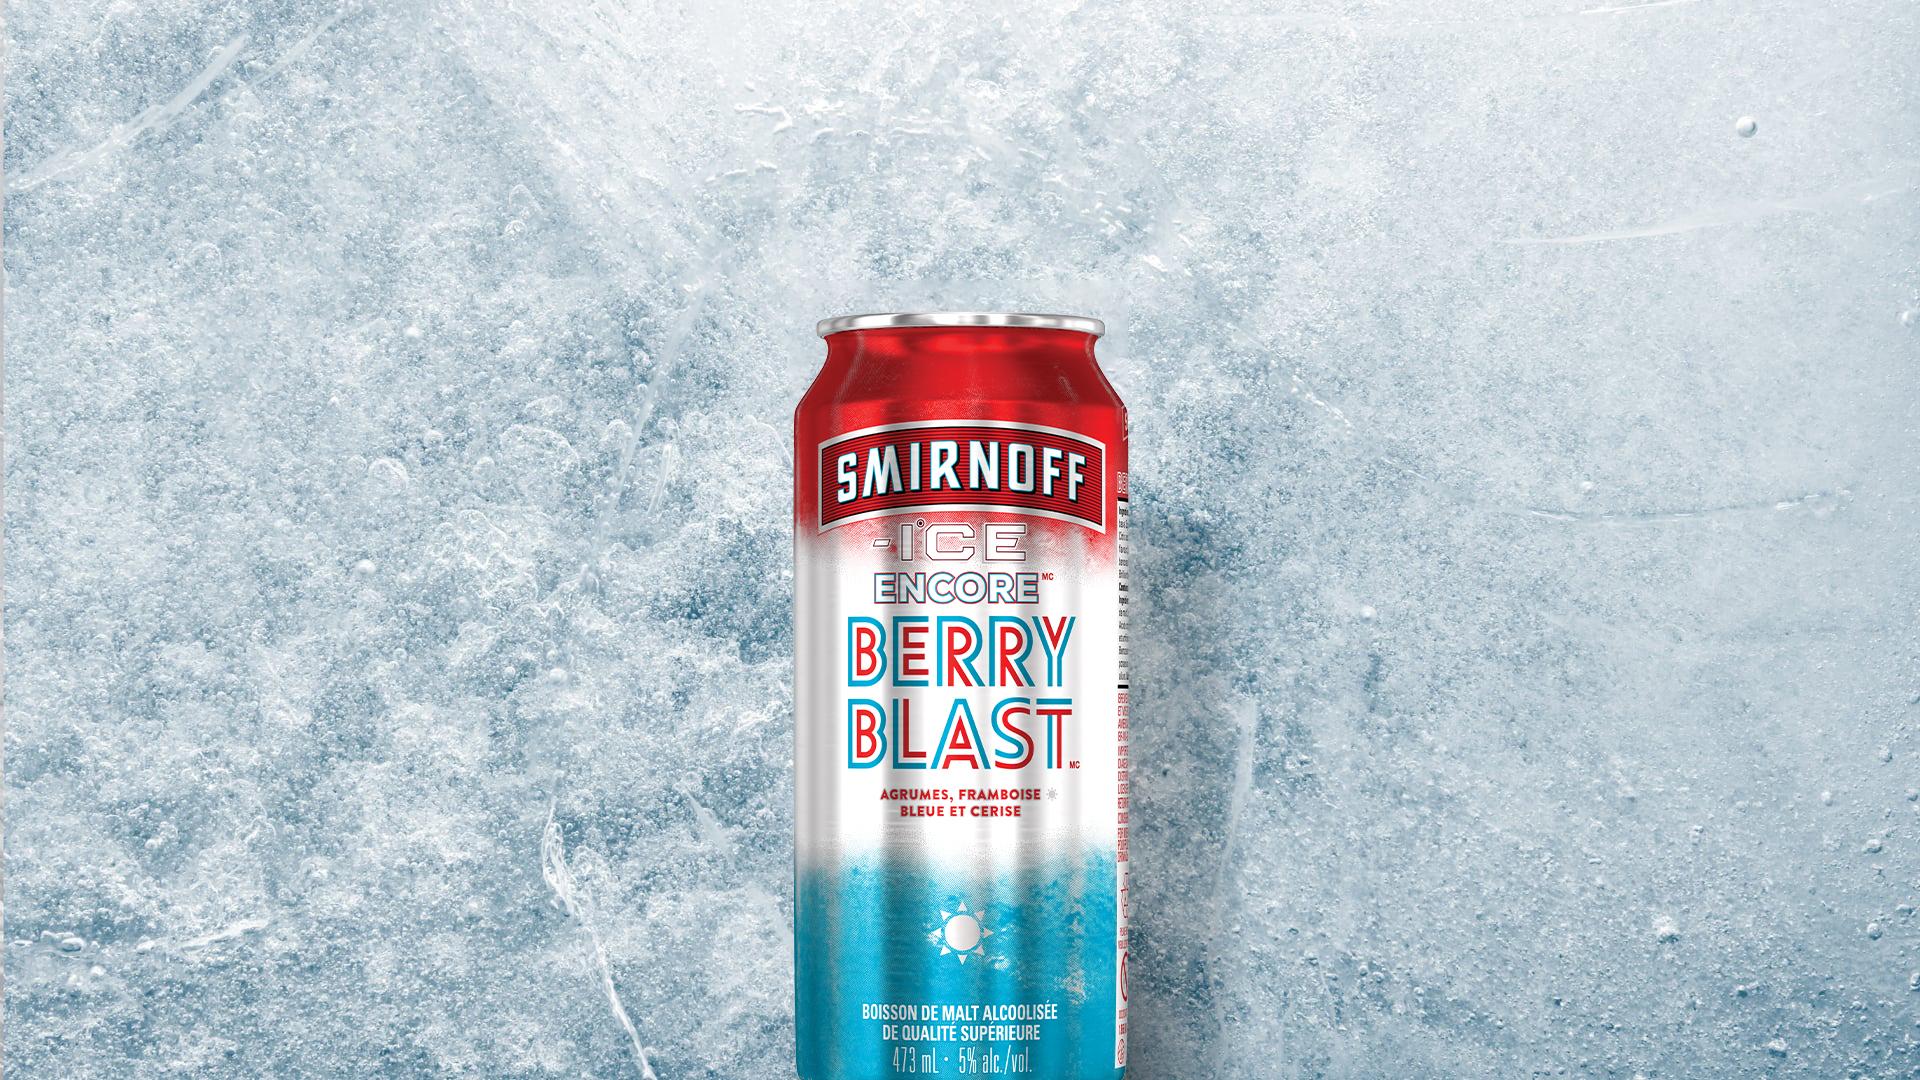 Smirnoff Ice Berry Blast on an ice background